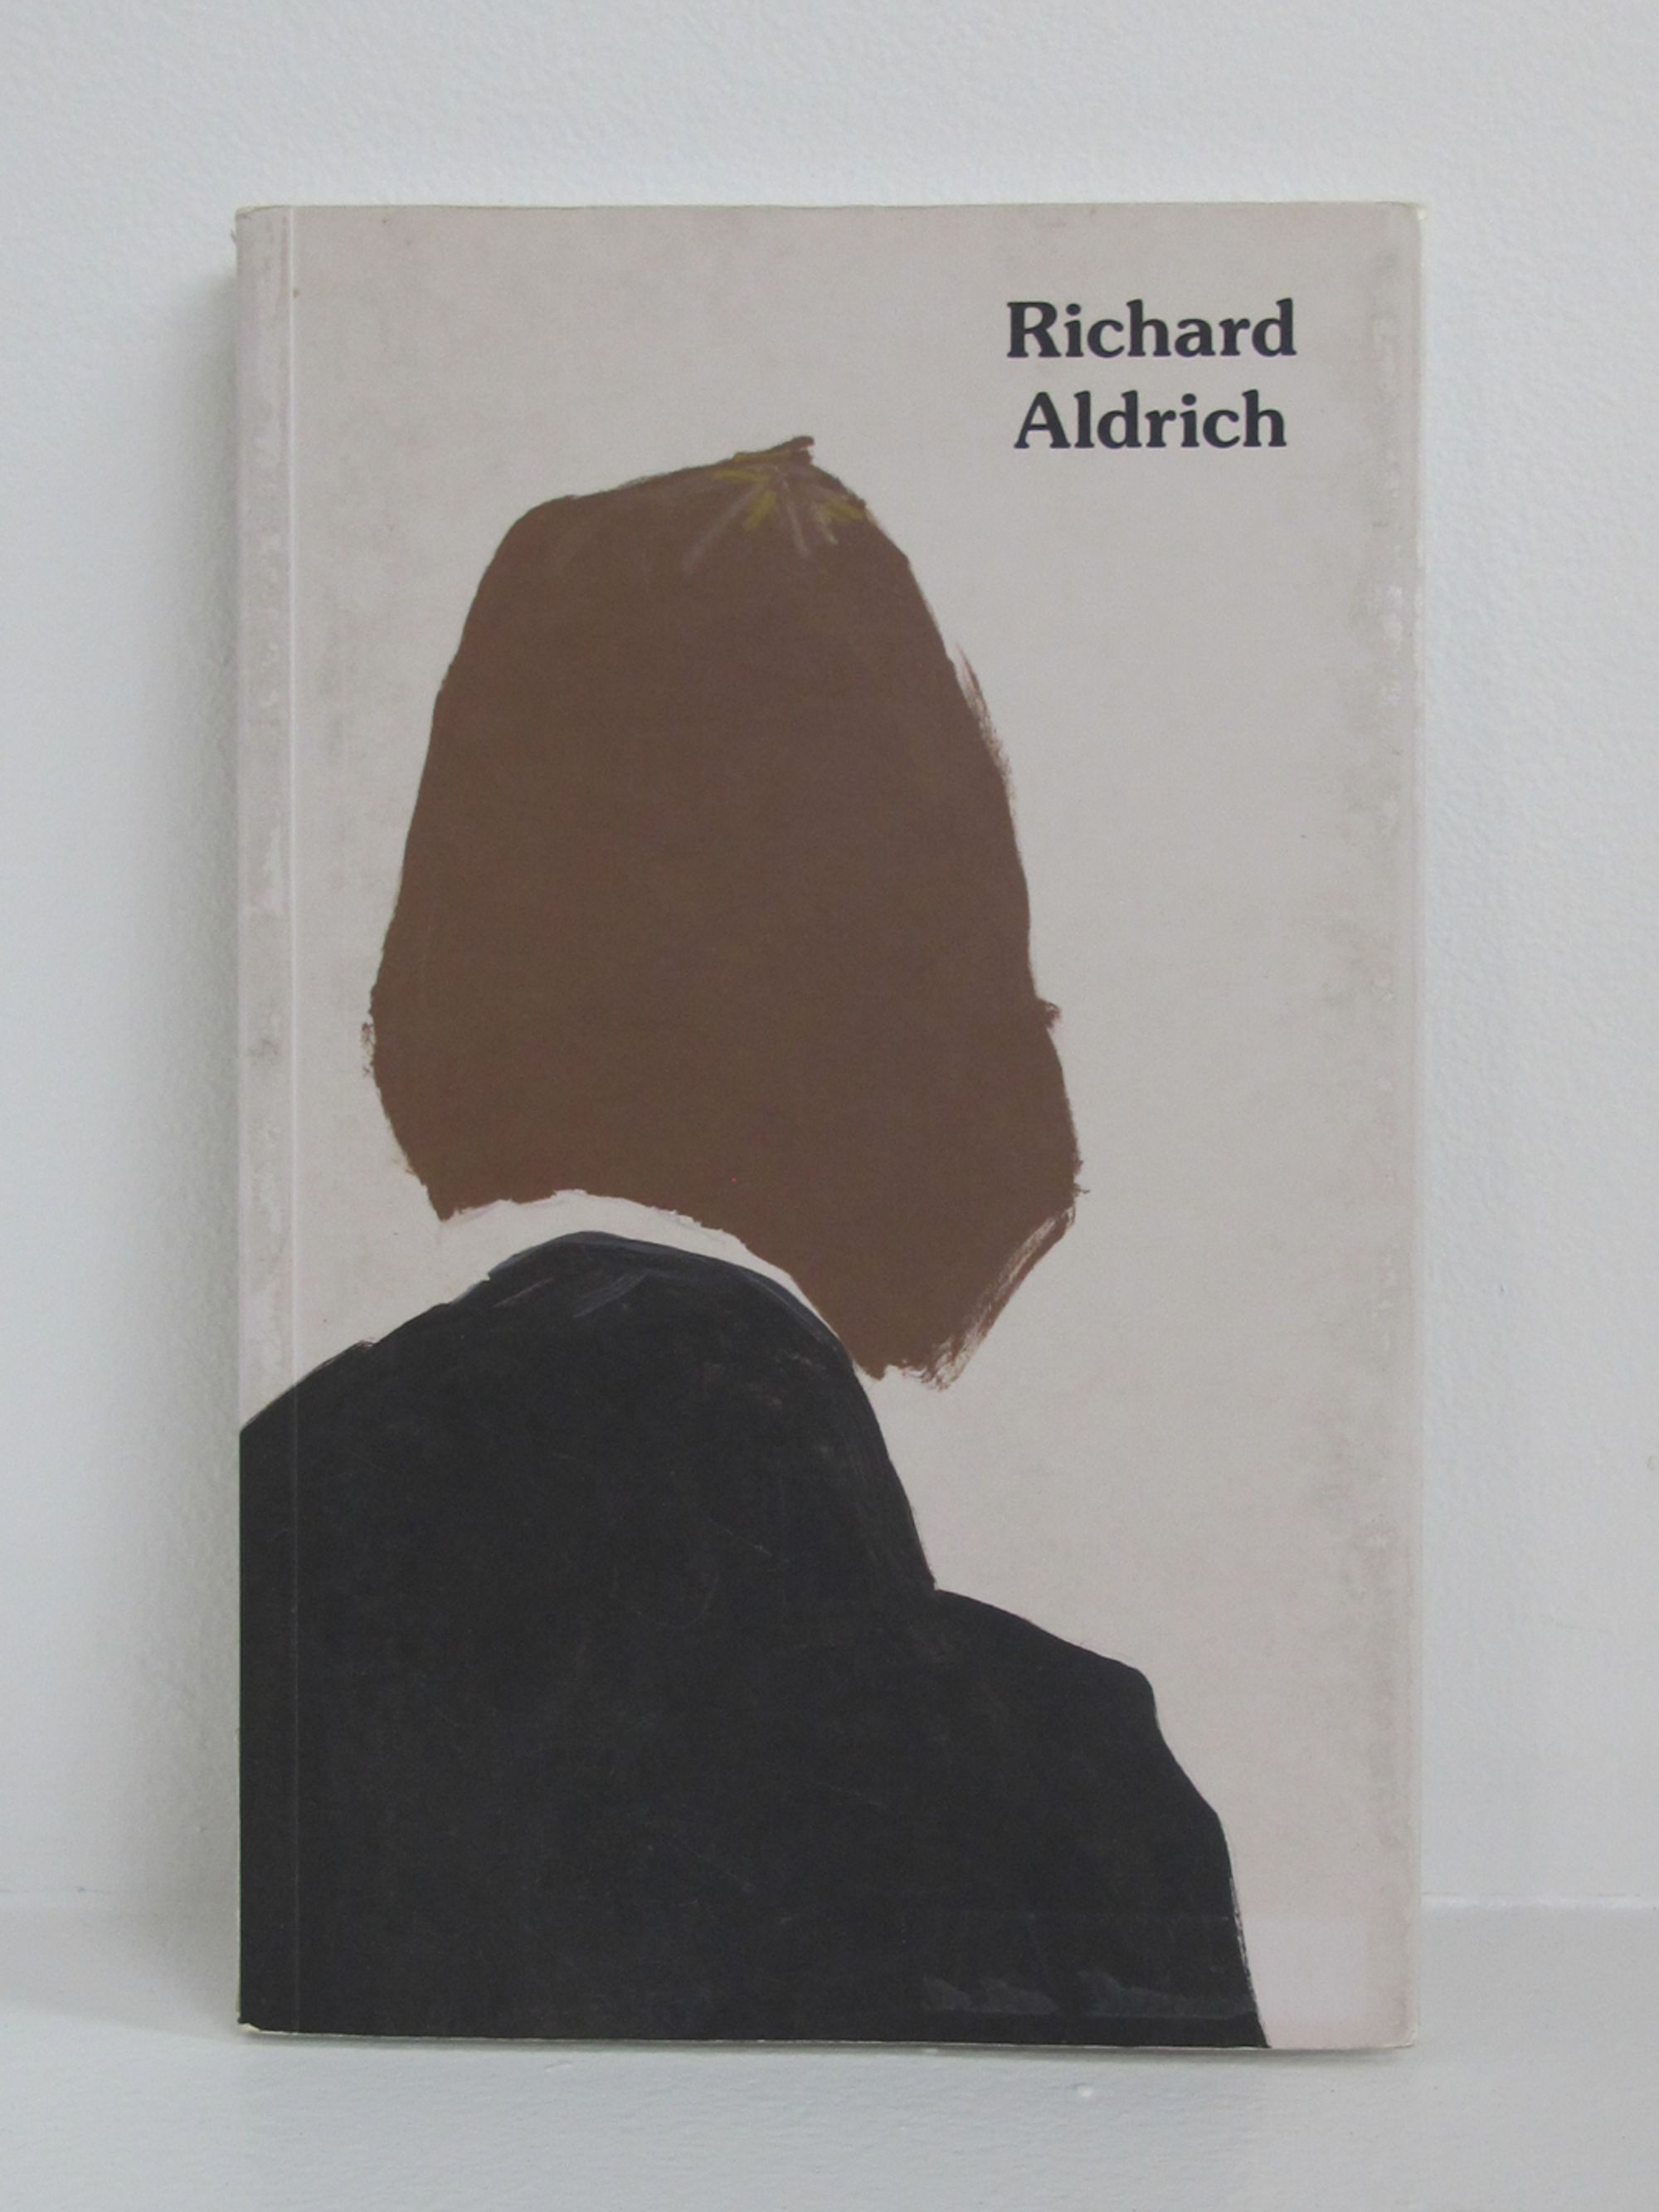 Detail view of Richard Aldrich against a plain gray background